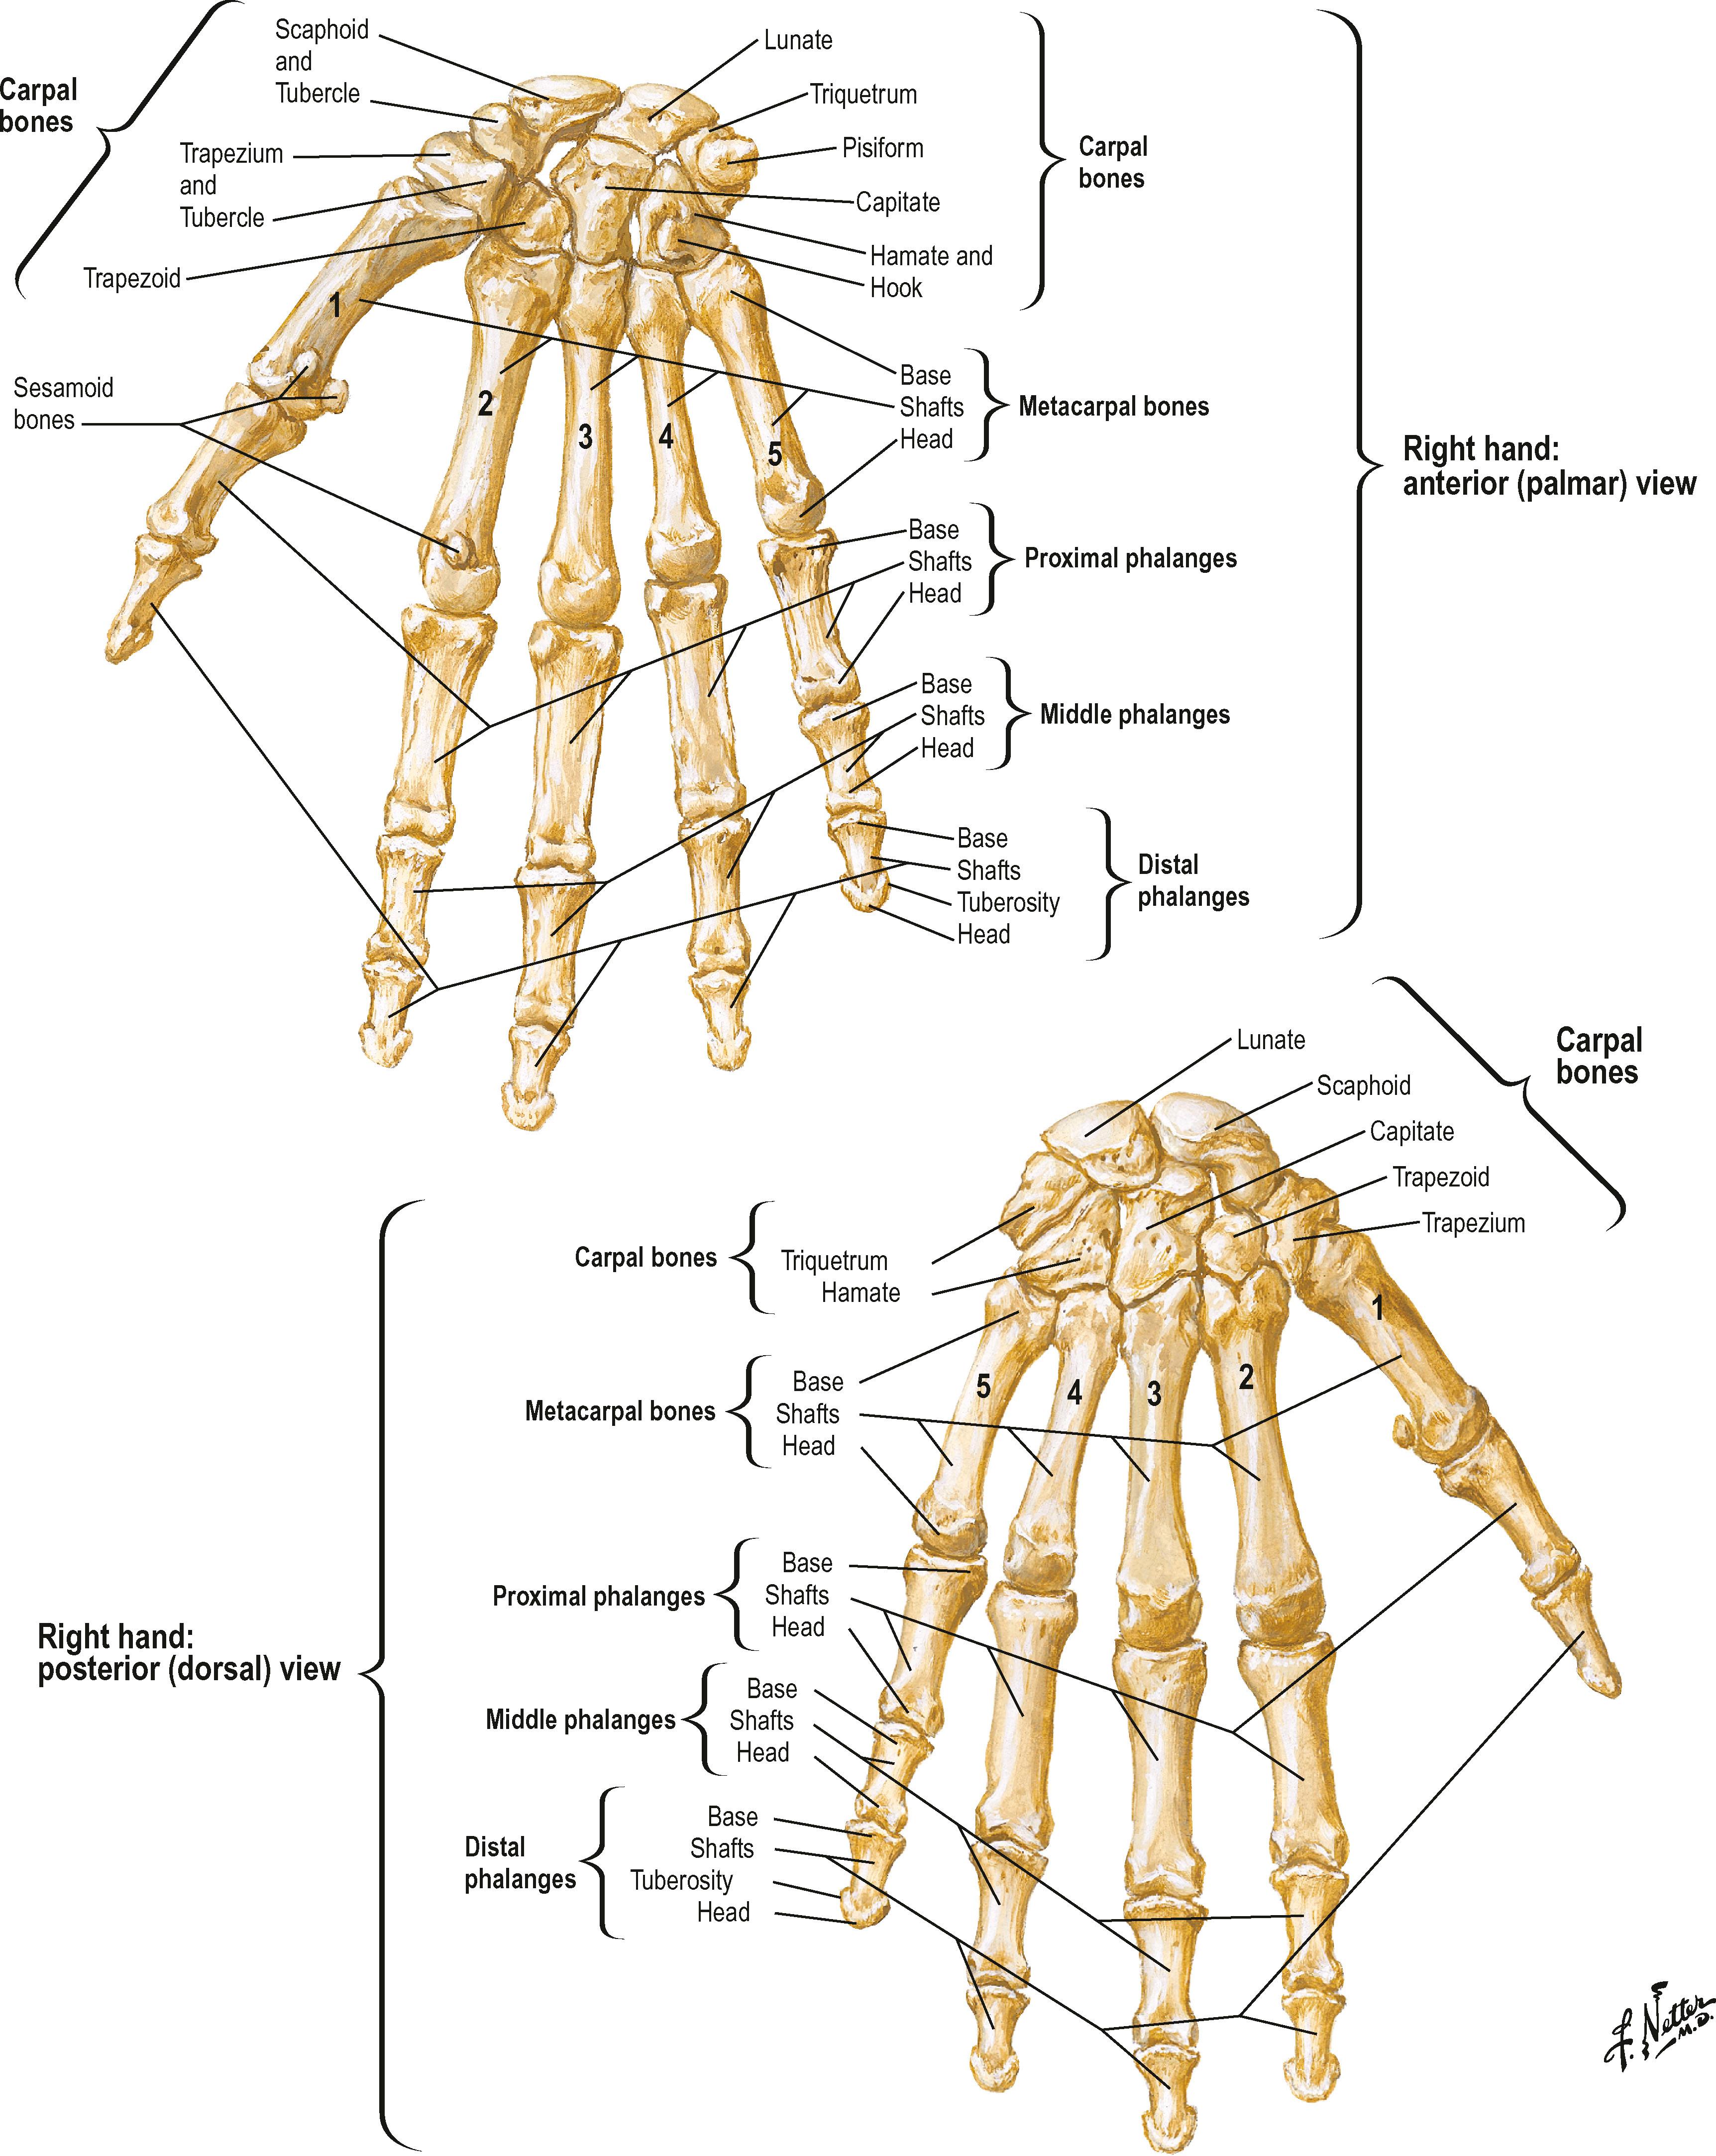 Figure 1.14, Bony anatomy of the wrist and hand.